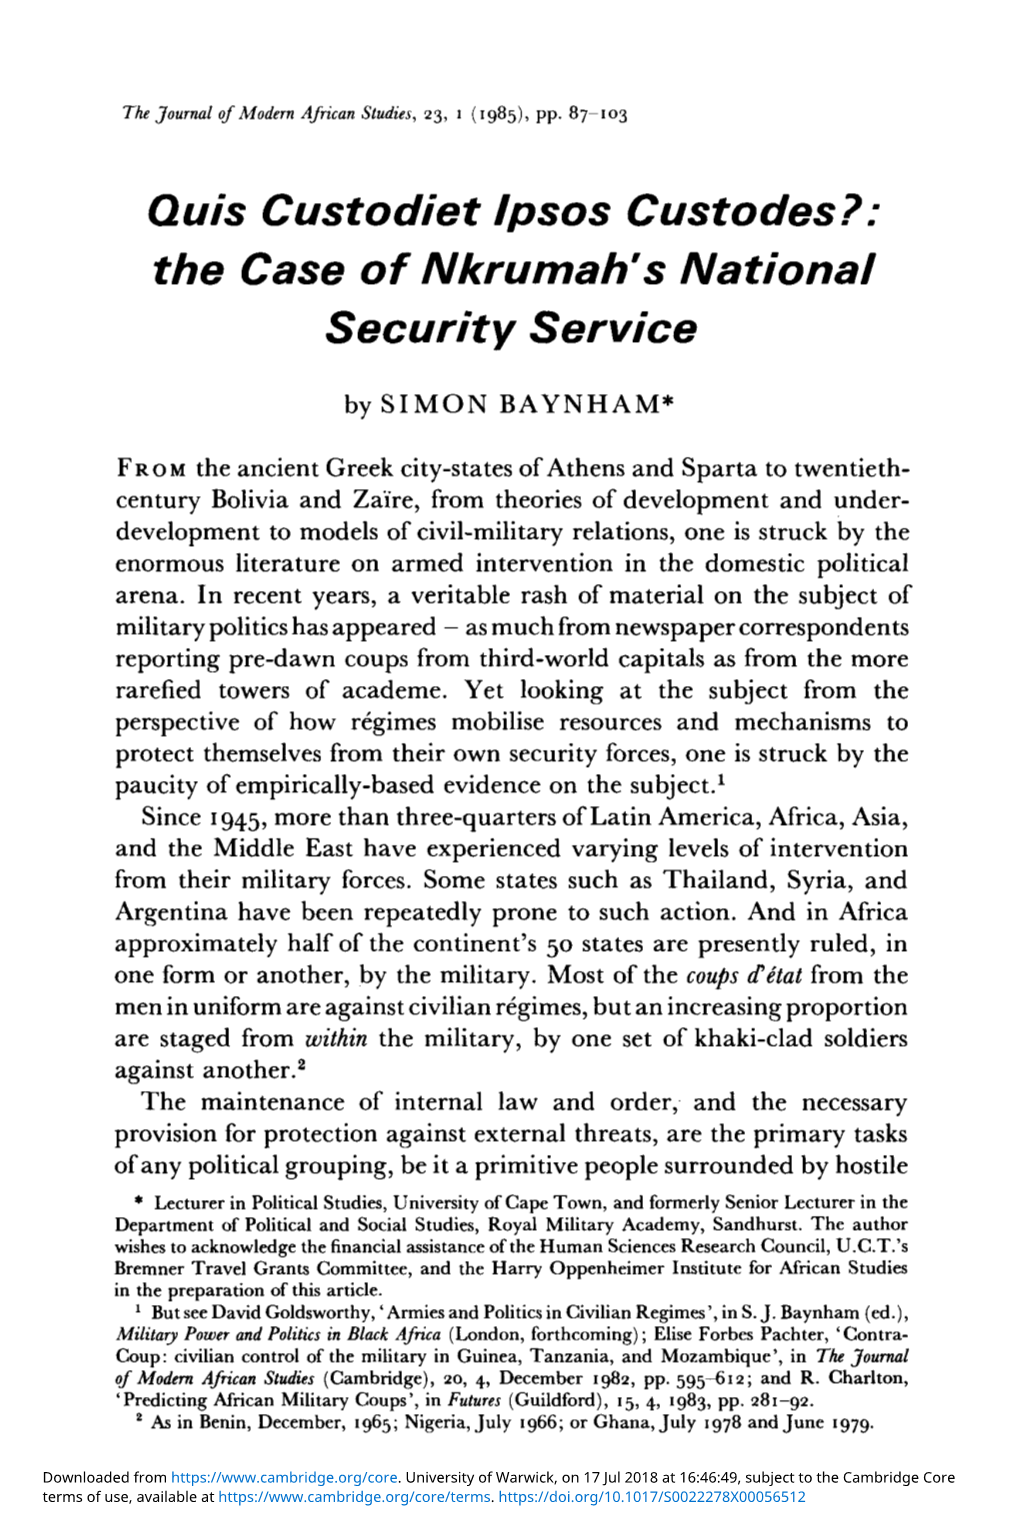 Simon Baynham, 'Quis Custodiet Ipsos Custodes? the Case of Nkrumah's National Security Service'